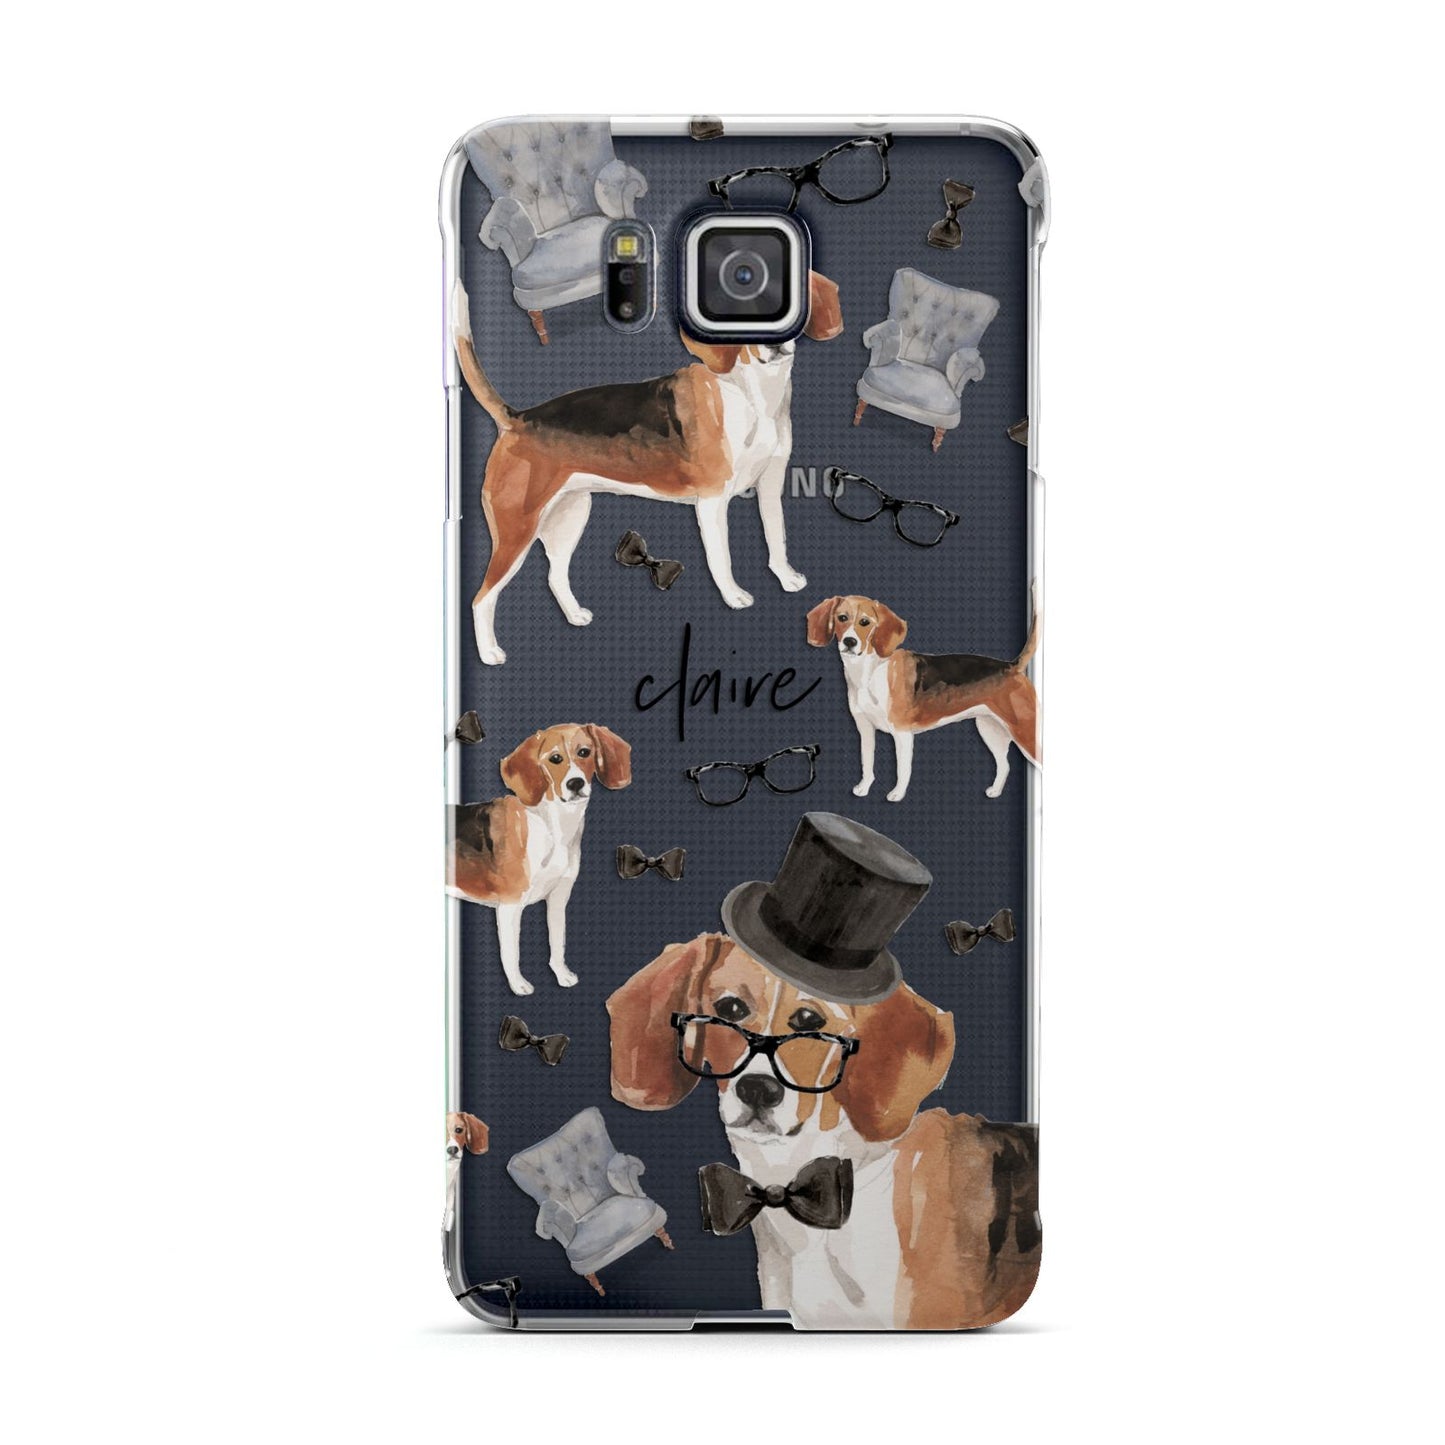 Personalised Beagle Dog Samsung Galaxy Alpha Case